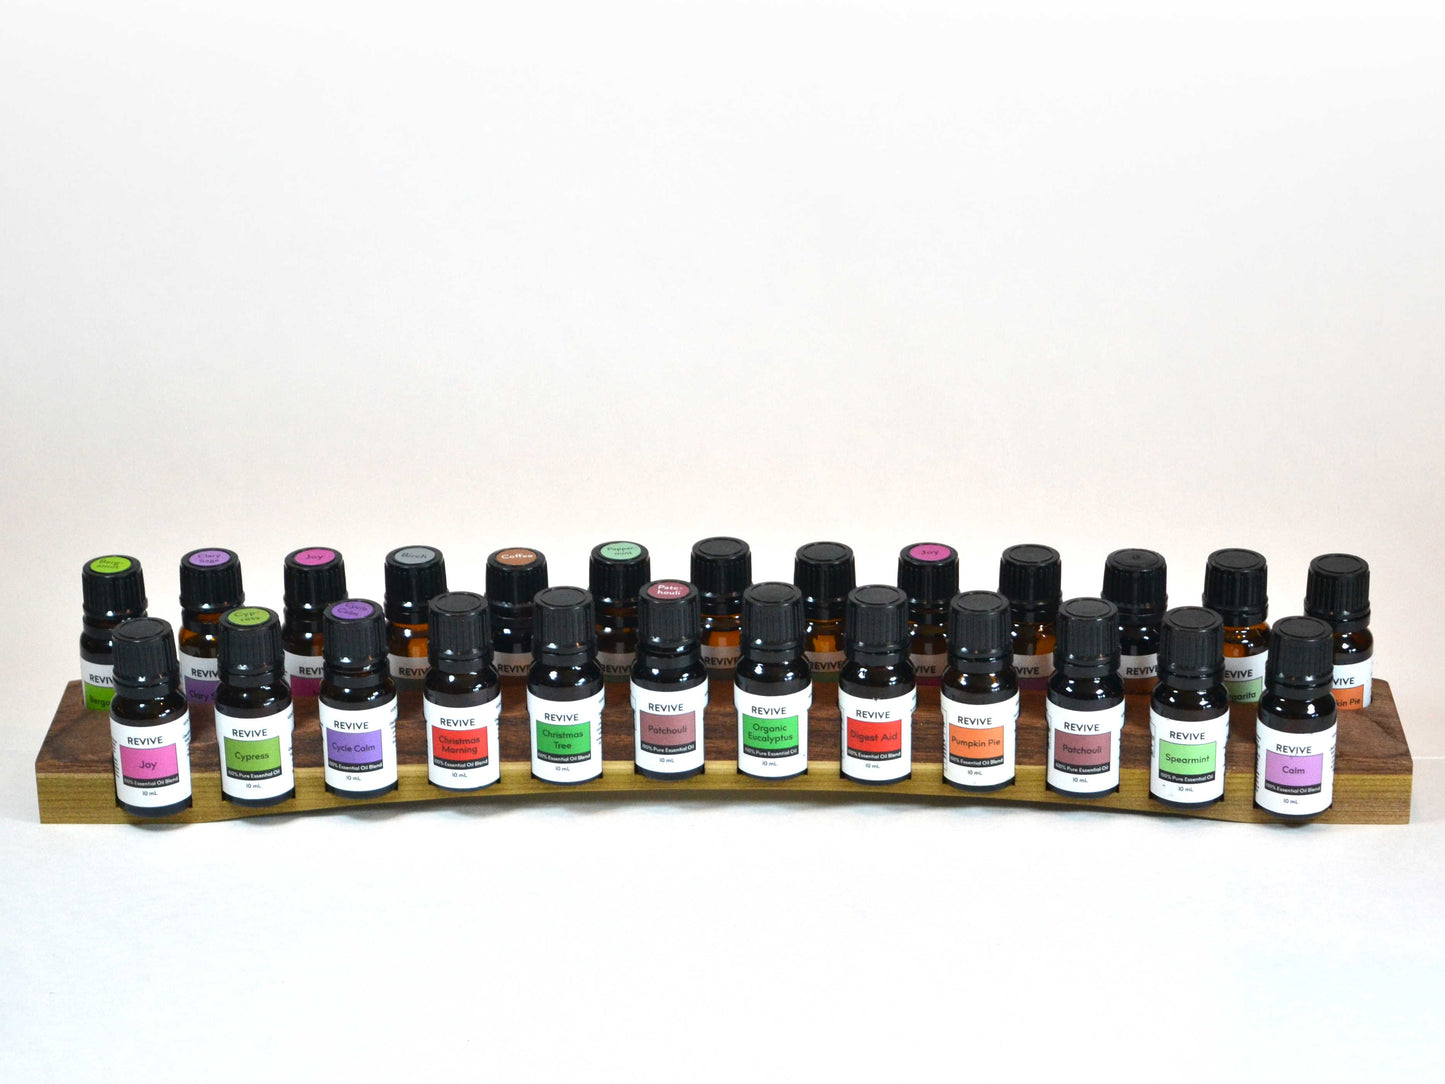 essential oils display for revive essential oils